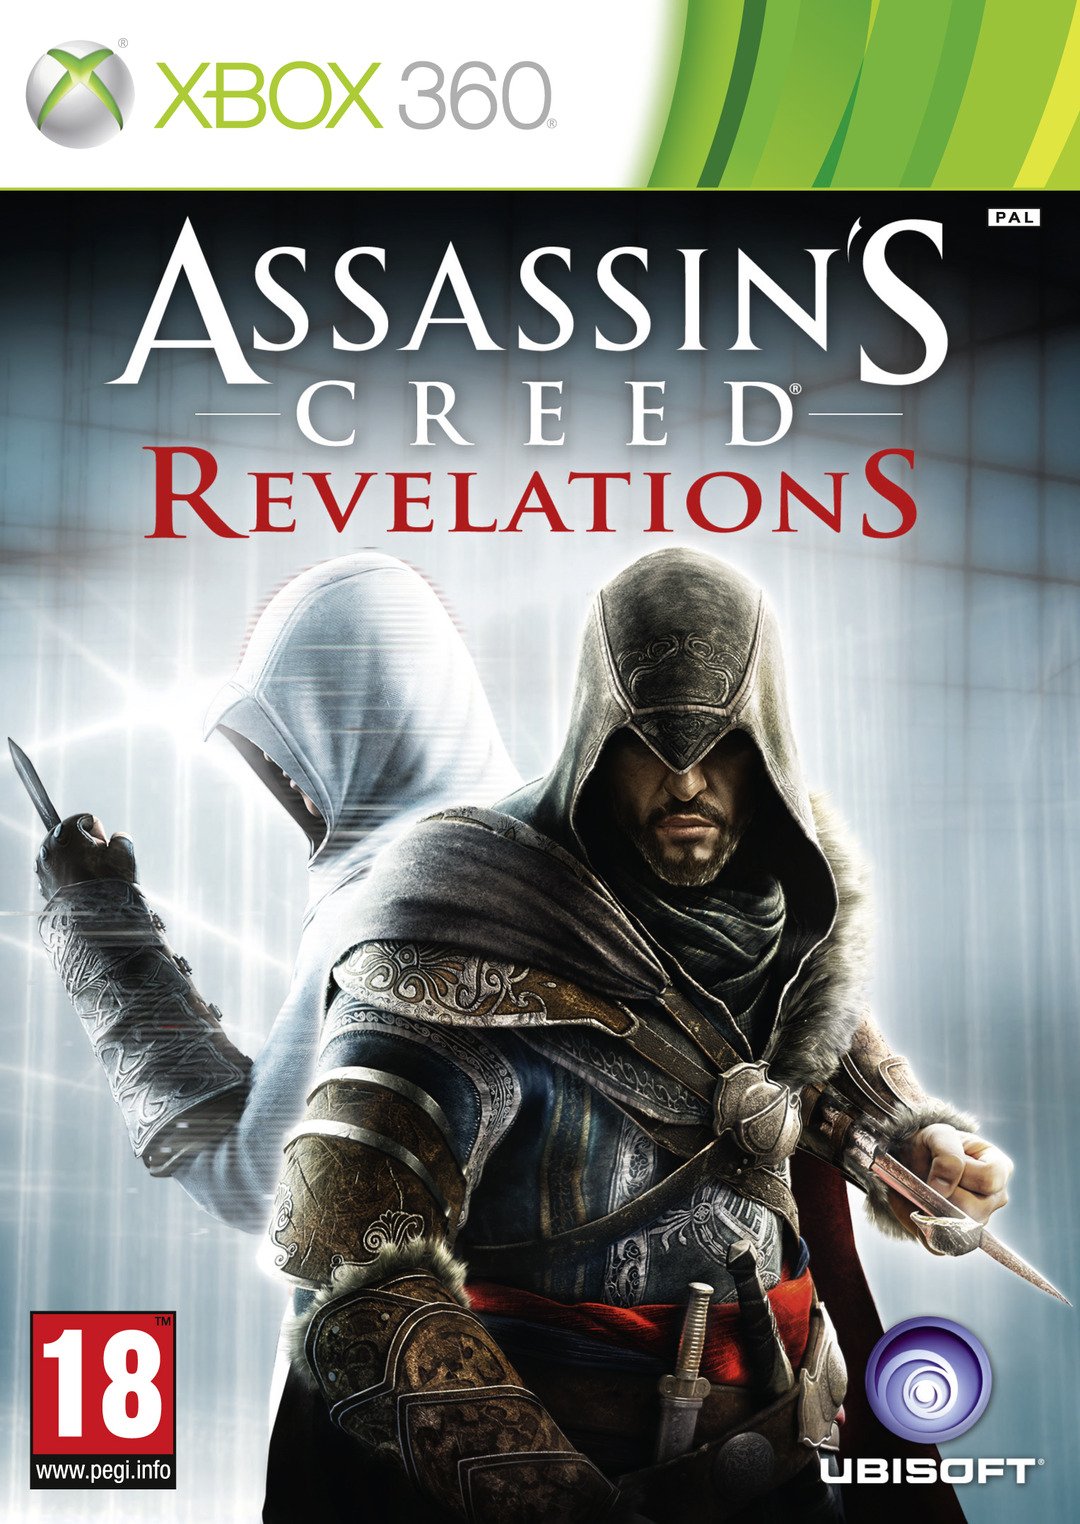 http://image.jeuxvideo.com/images/jaquettes/00040011/jaquette-assassin-s-creed-revelations-xbox-360-cover-avant-g-1313614936.jpg